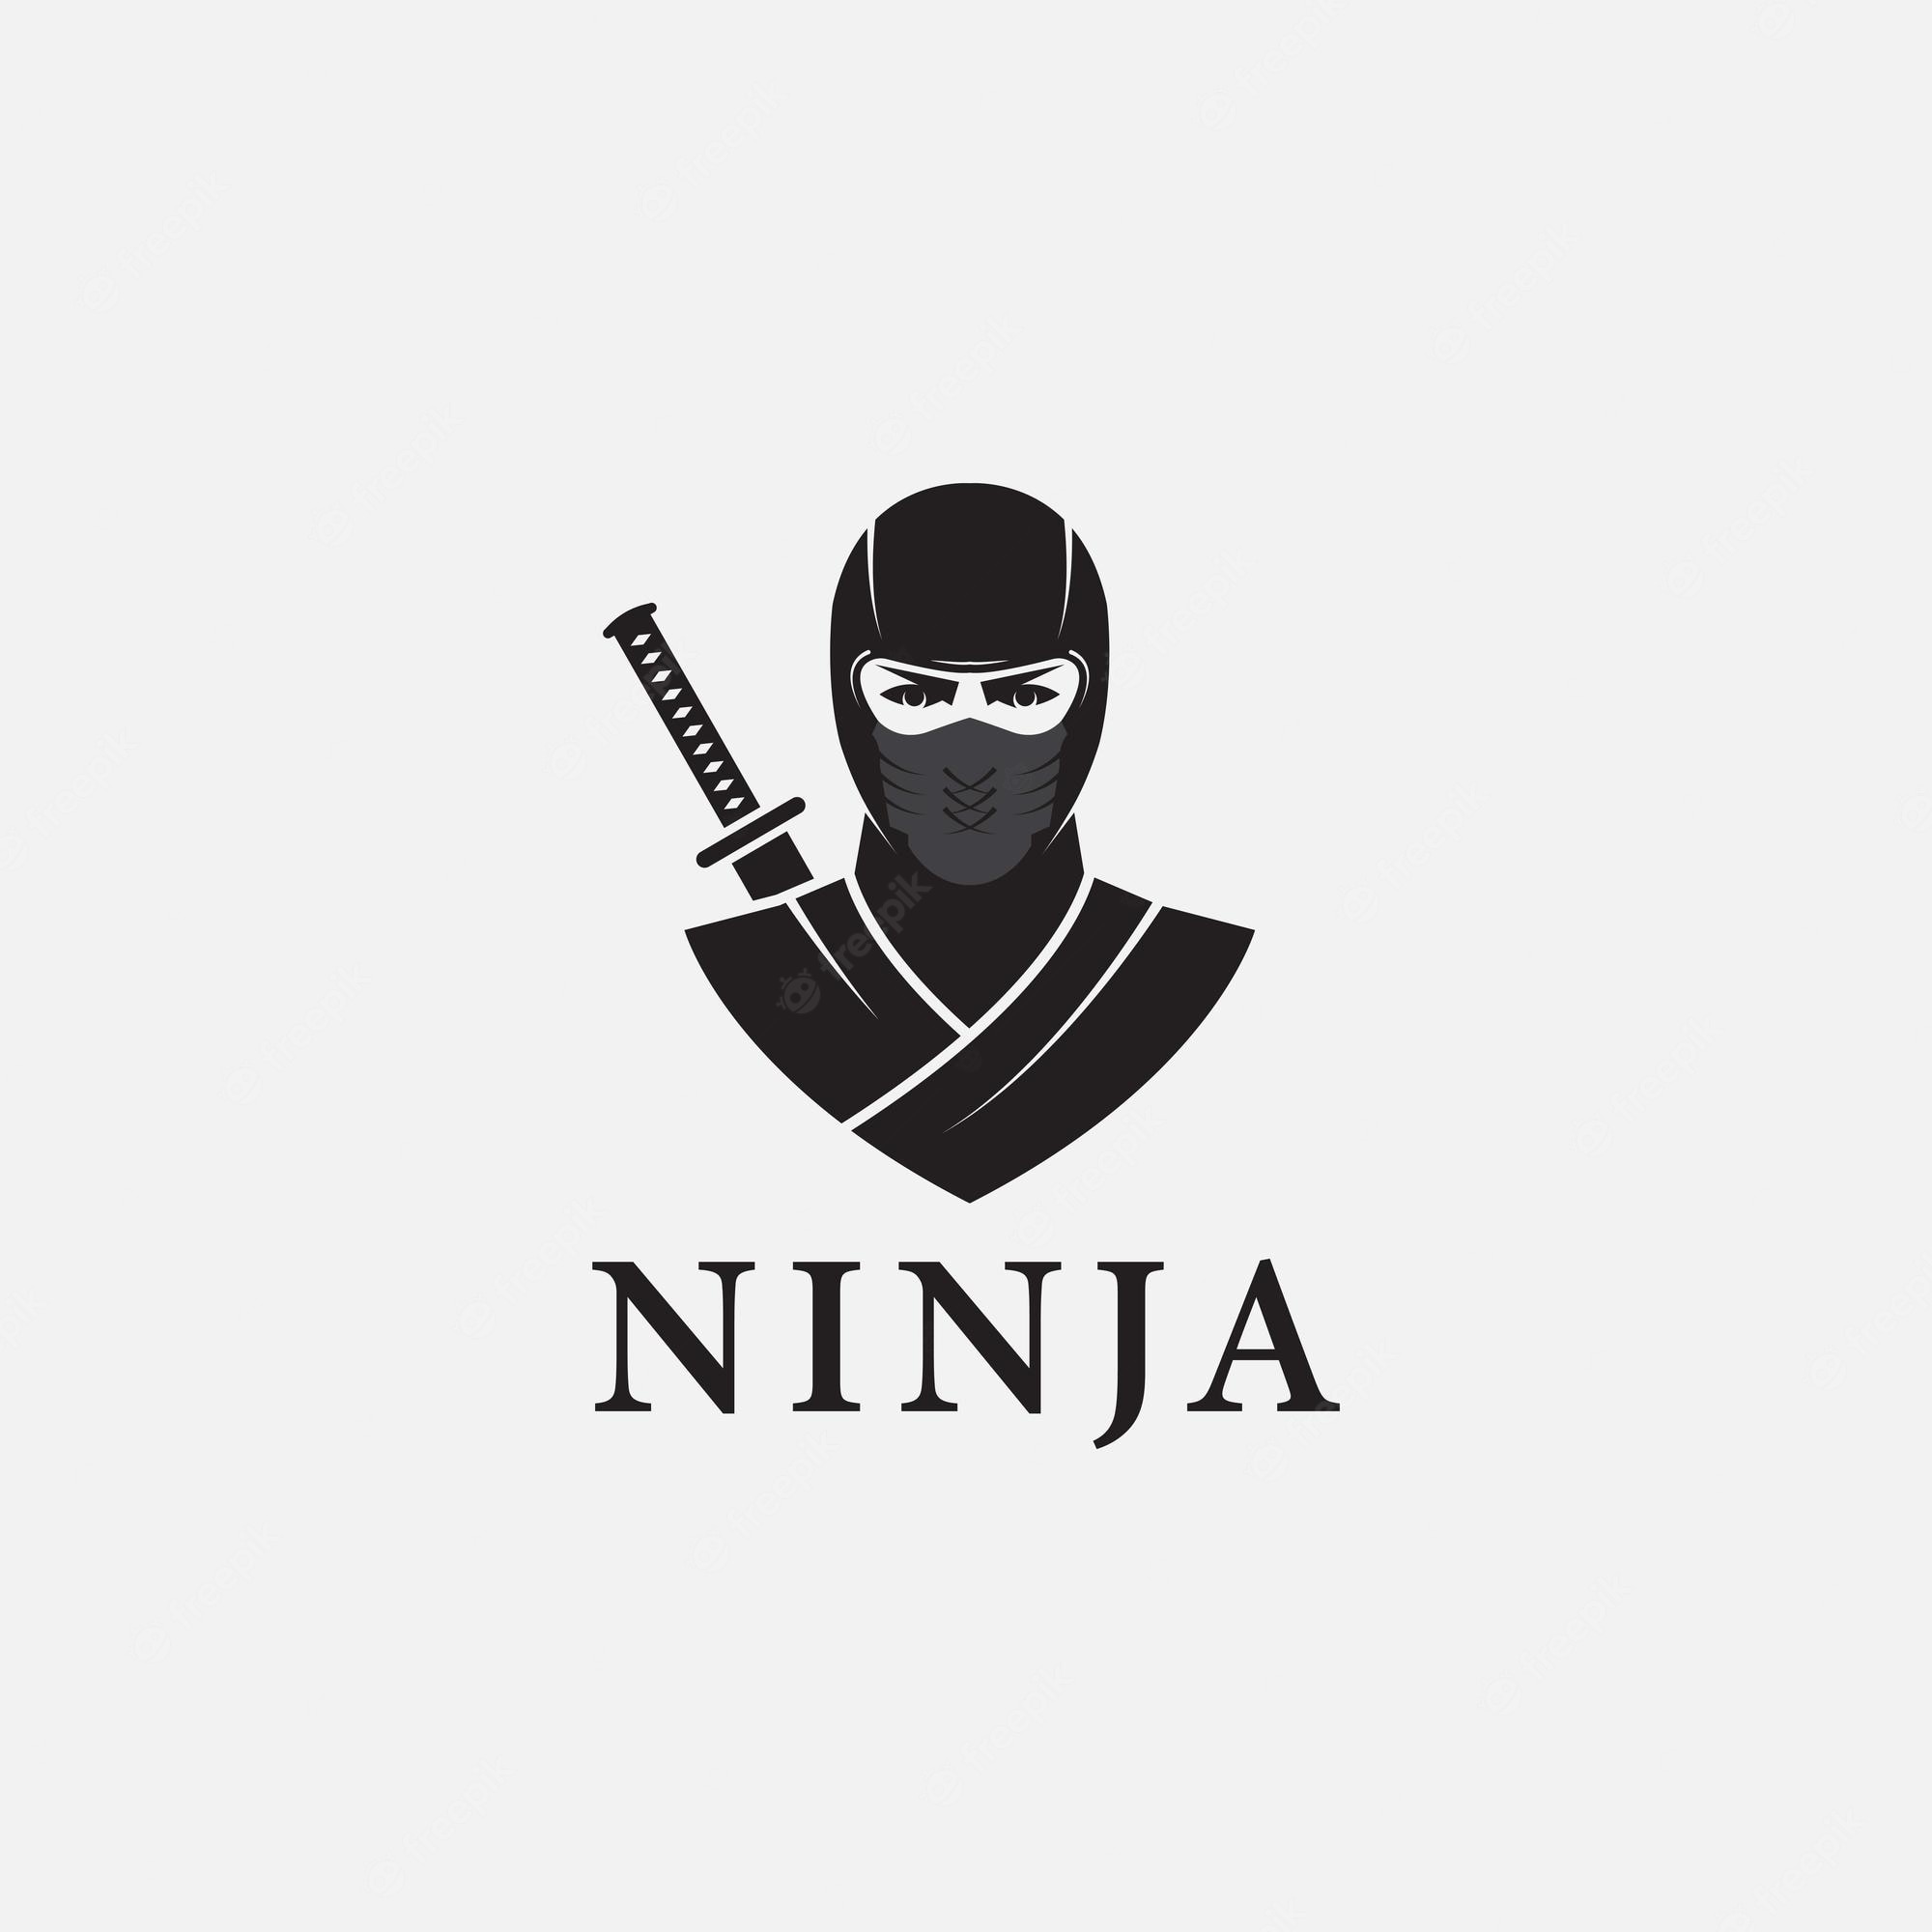 Ninja Silhouette Image. Free Vectors, & PSD